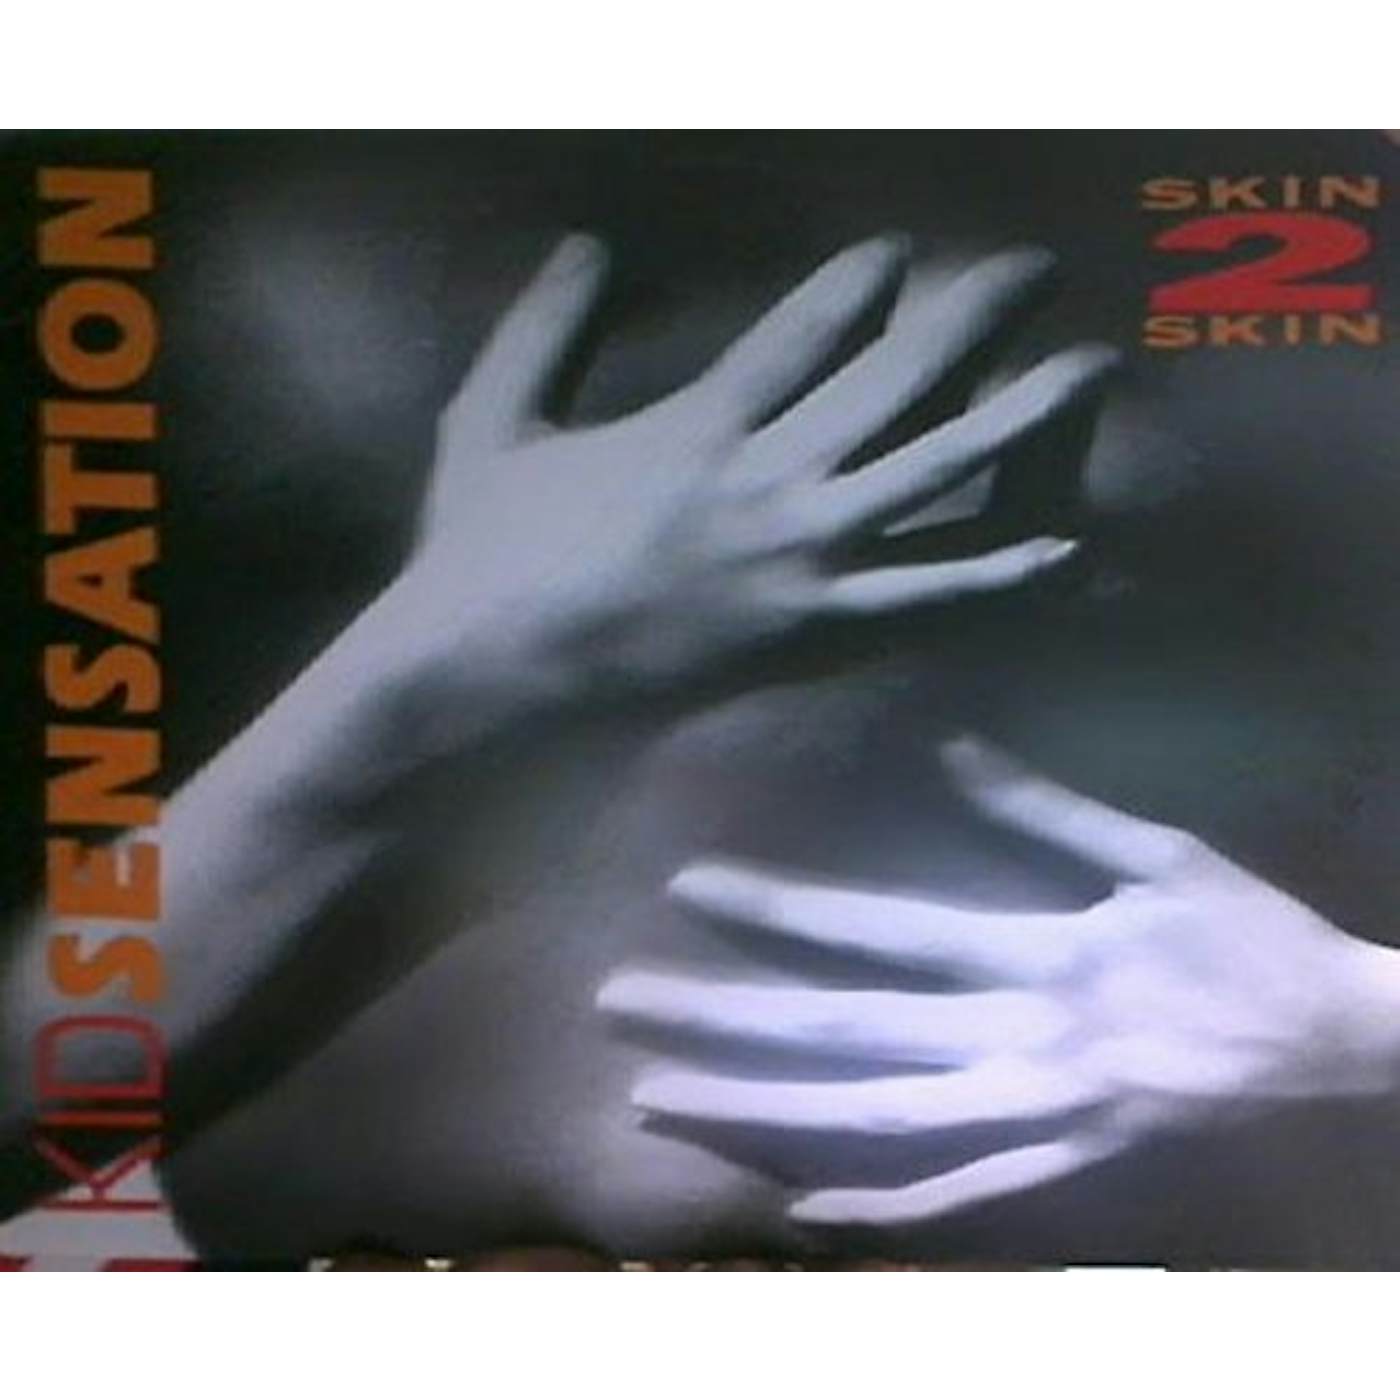 Kid Sensation Skin 2 Skin Vinyl Record